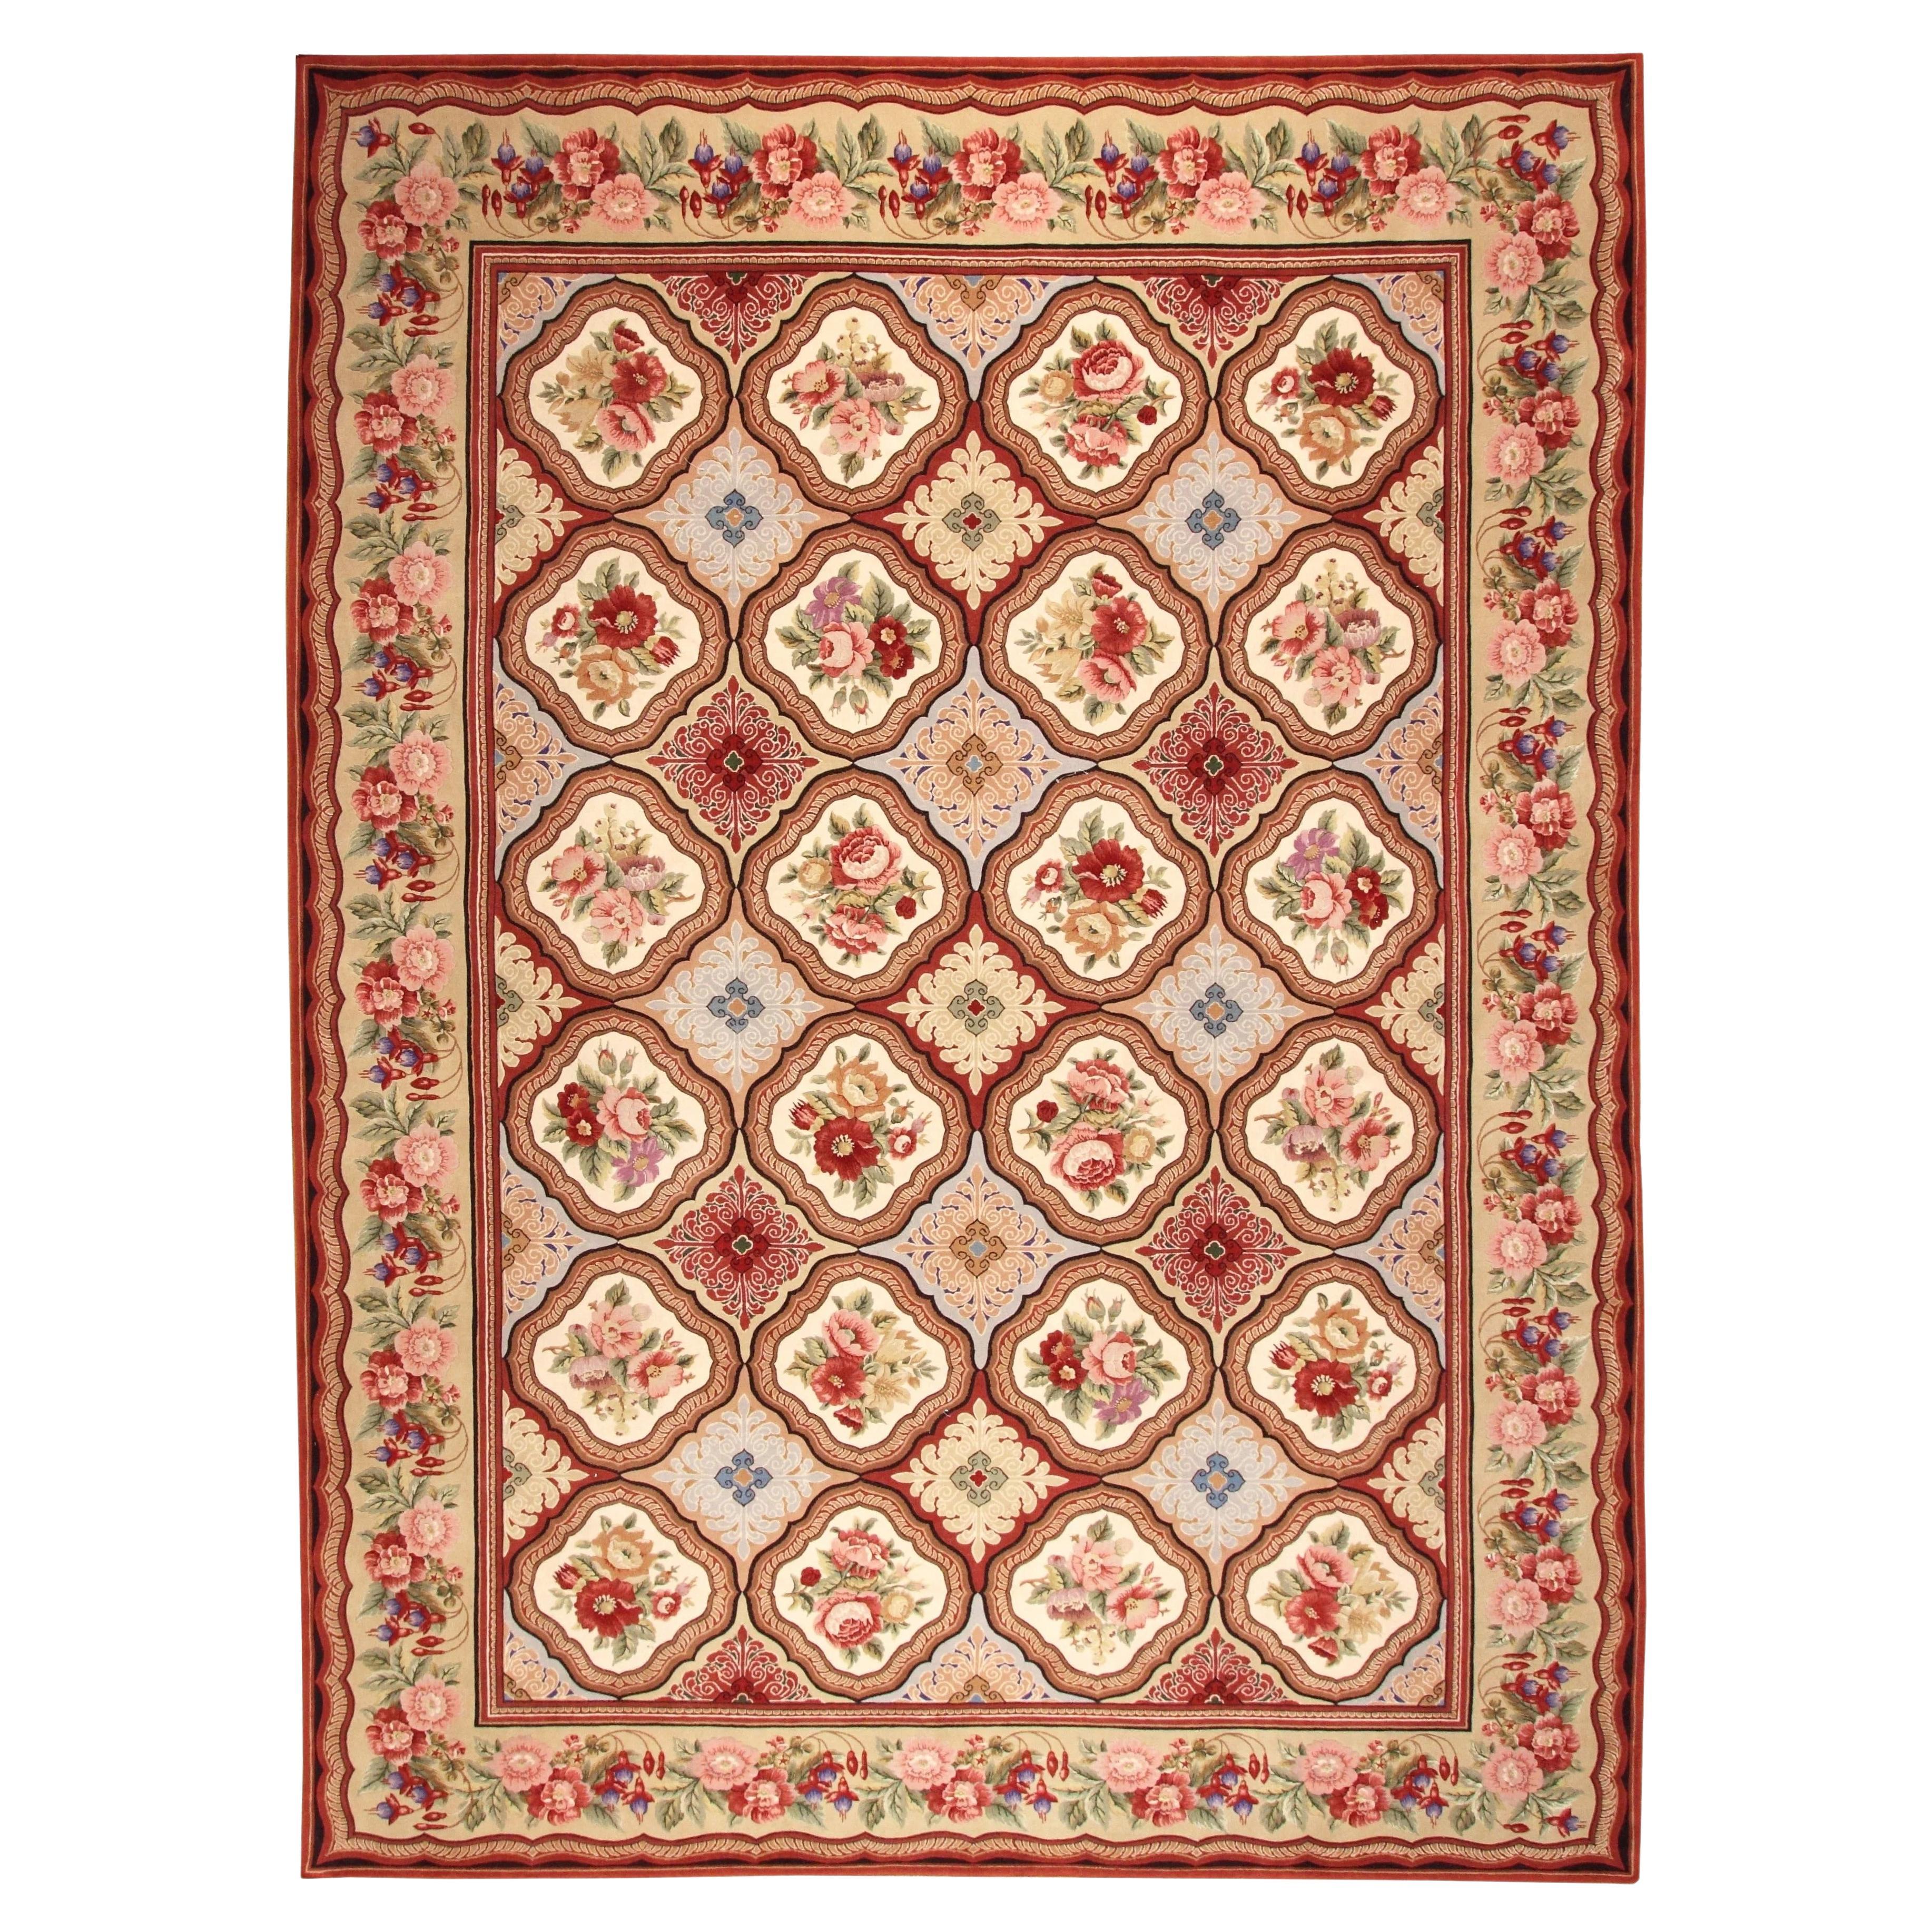 VIA COMO 'Porsiere' Rug Hand Knotted Wool Silk One of a Kind Carpet 10x14 RARE